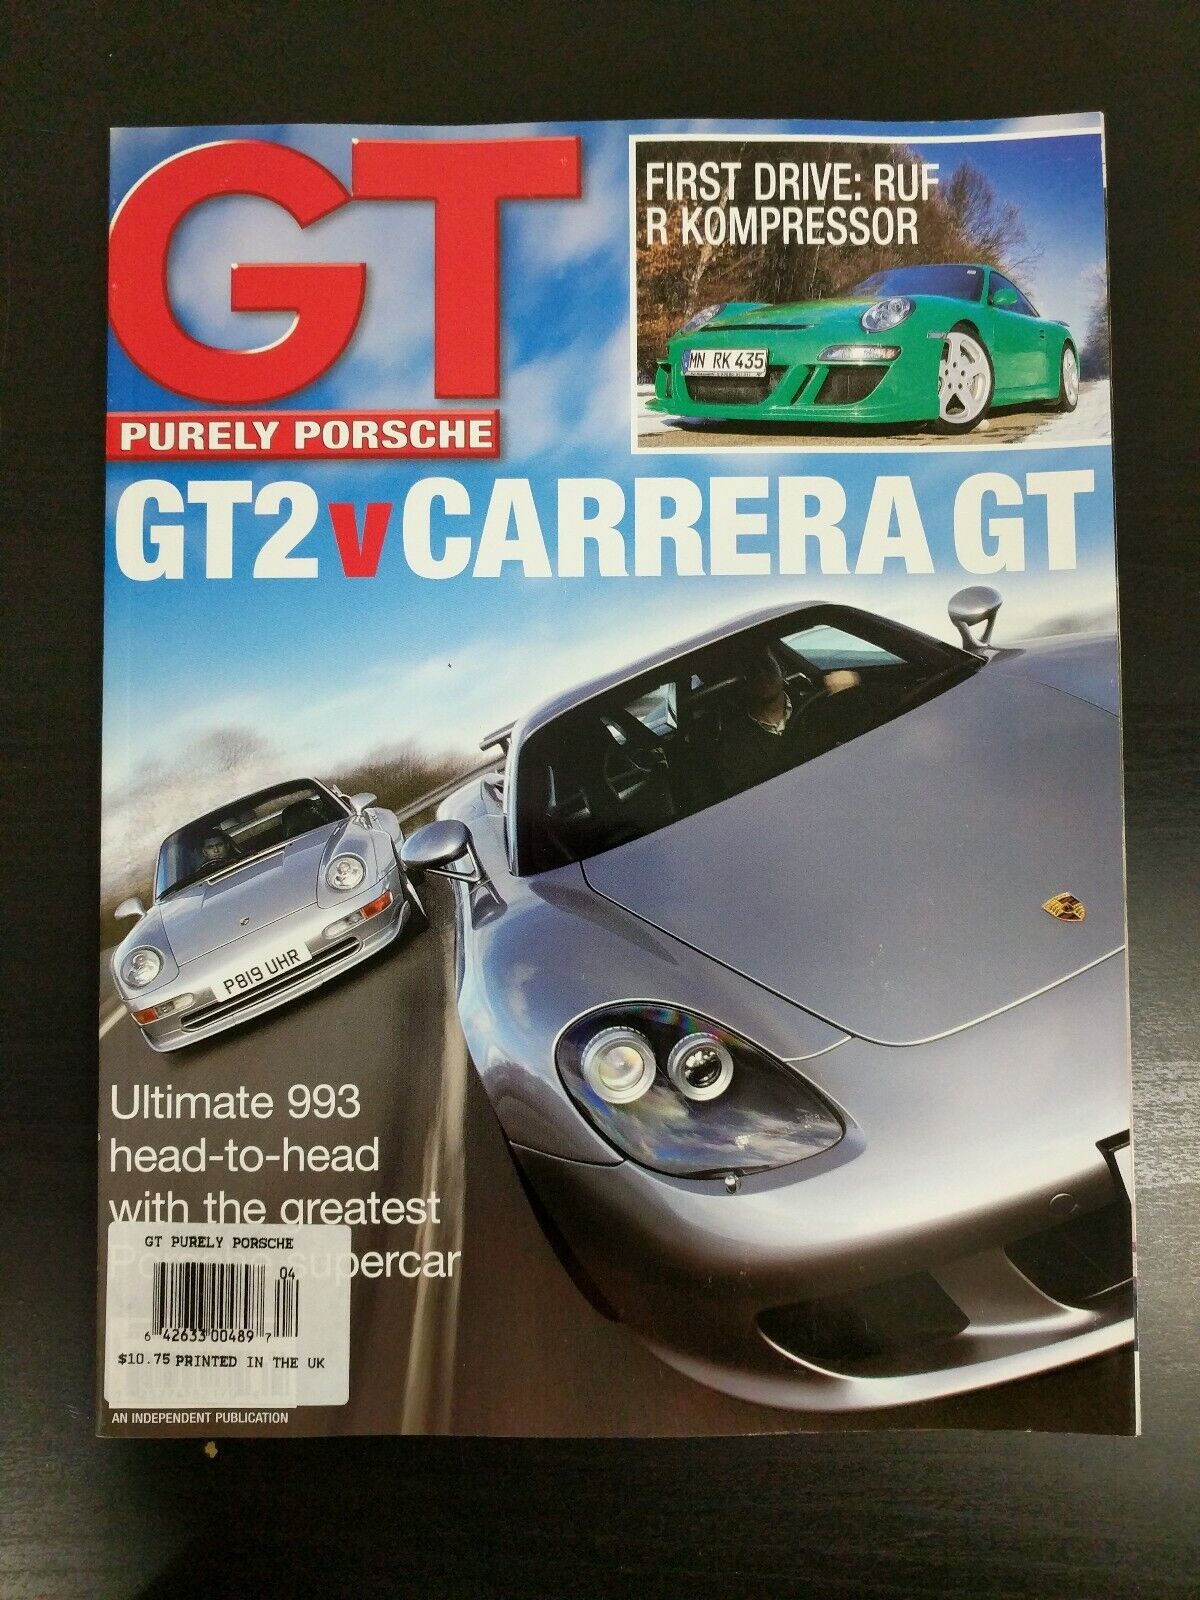 GT Porsche Apr 2006 993 GT2 vs Carrera GT, Ruf R Kompressor | eBay